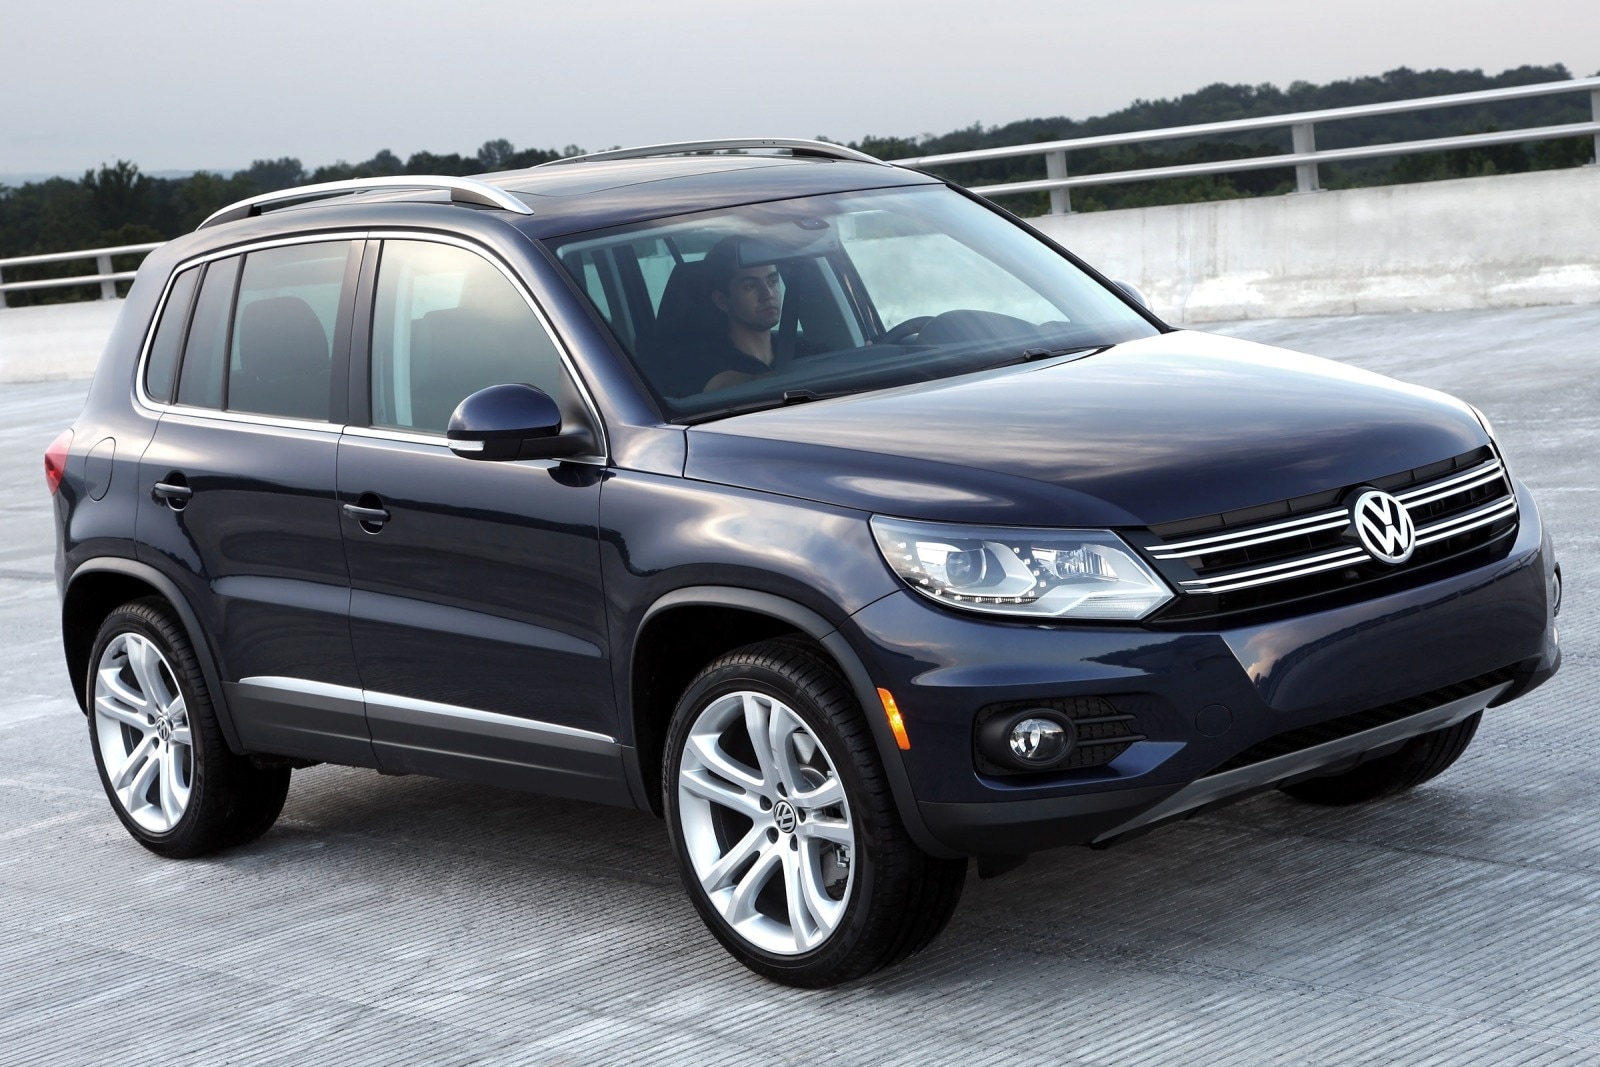 2013 Volkswagen Tiguan Review & Ratings | Edmunds